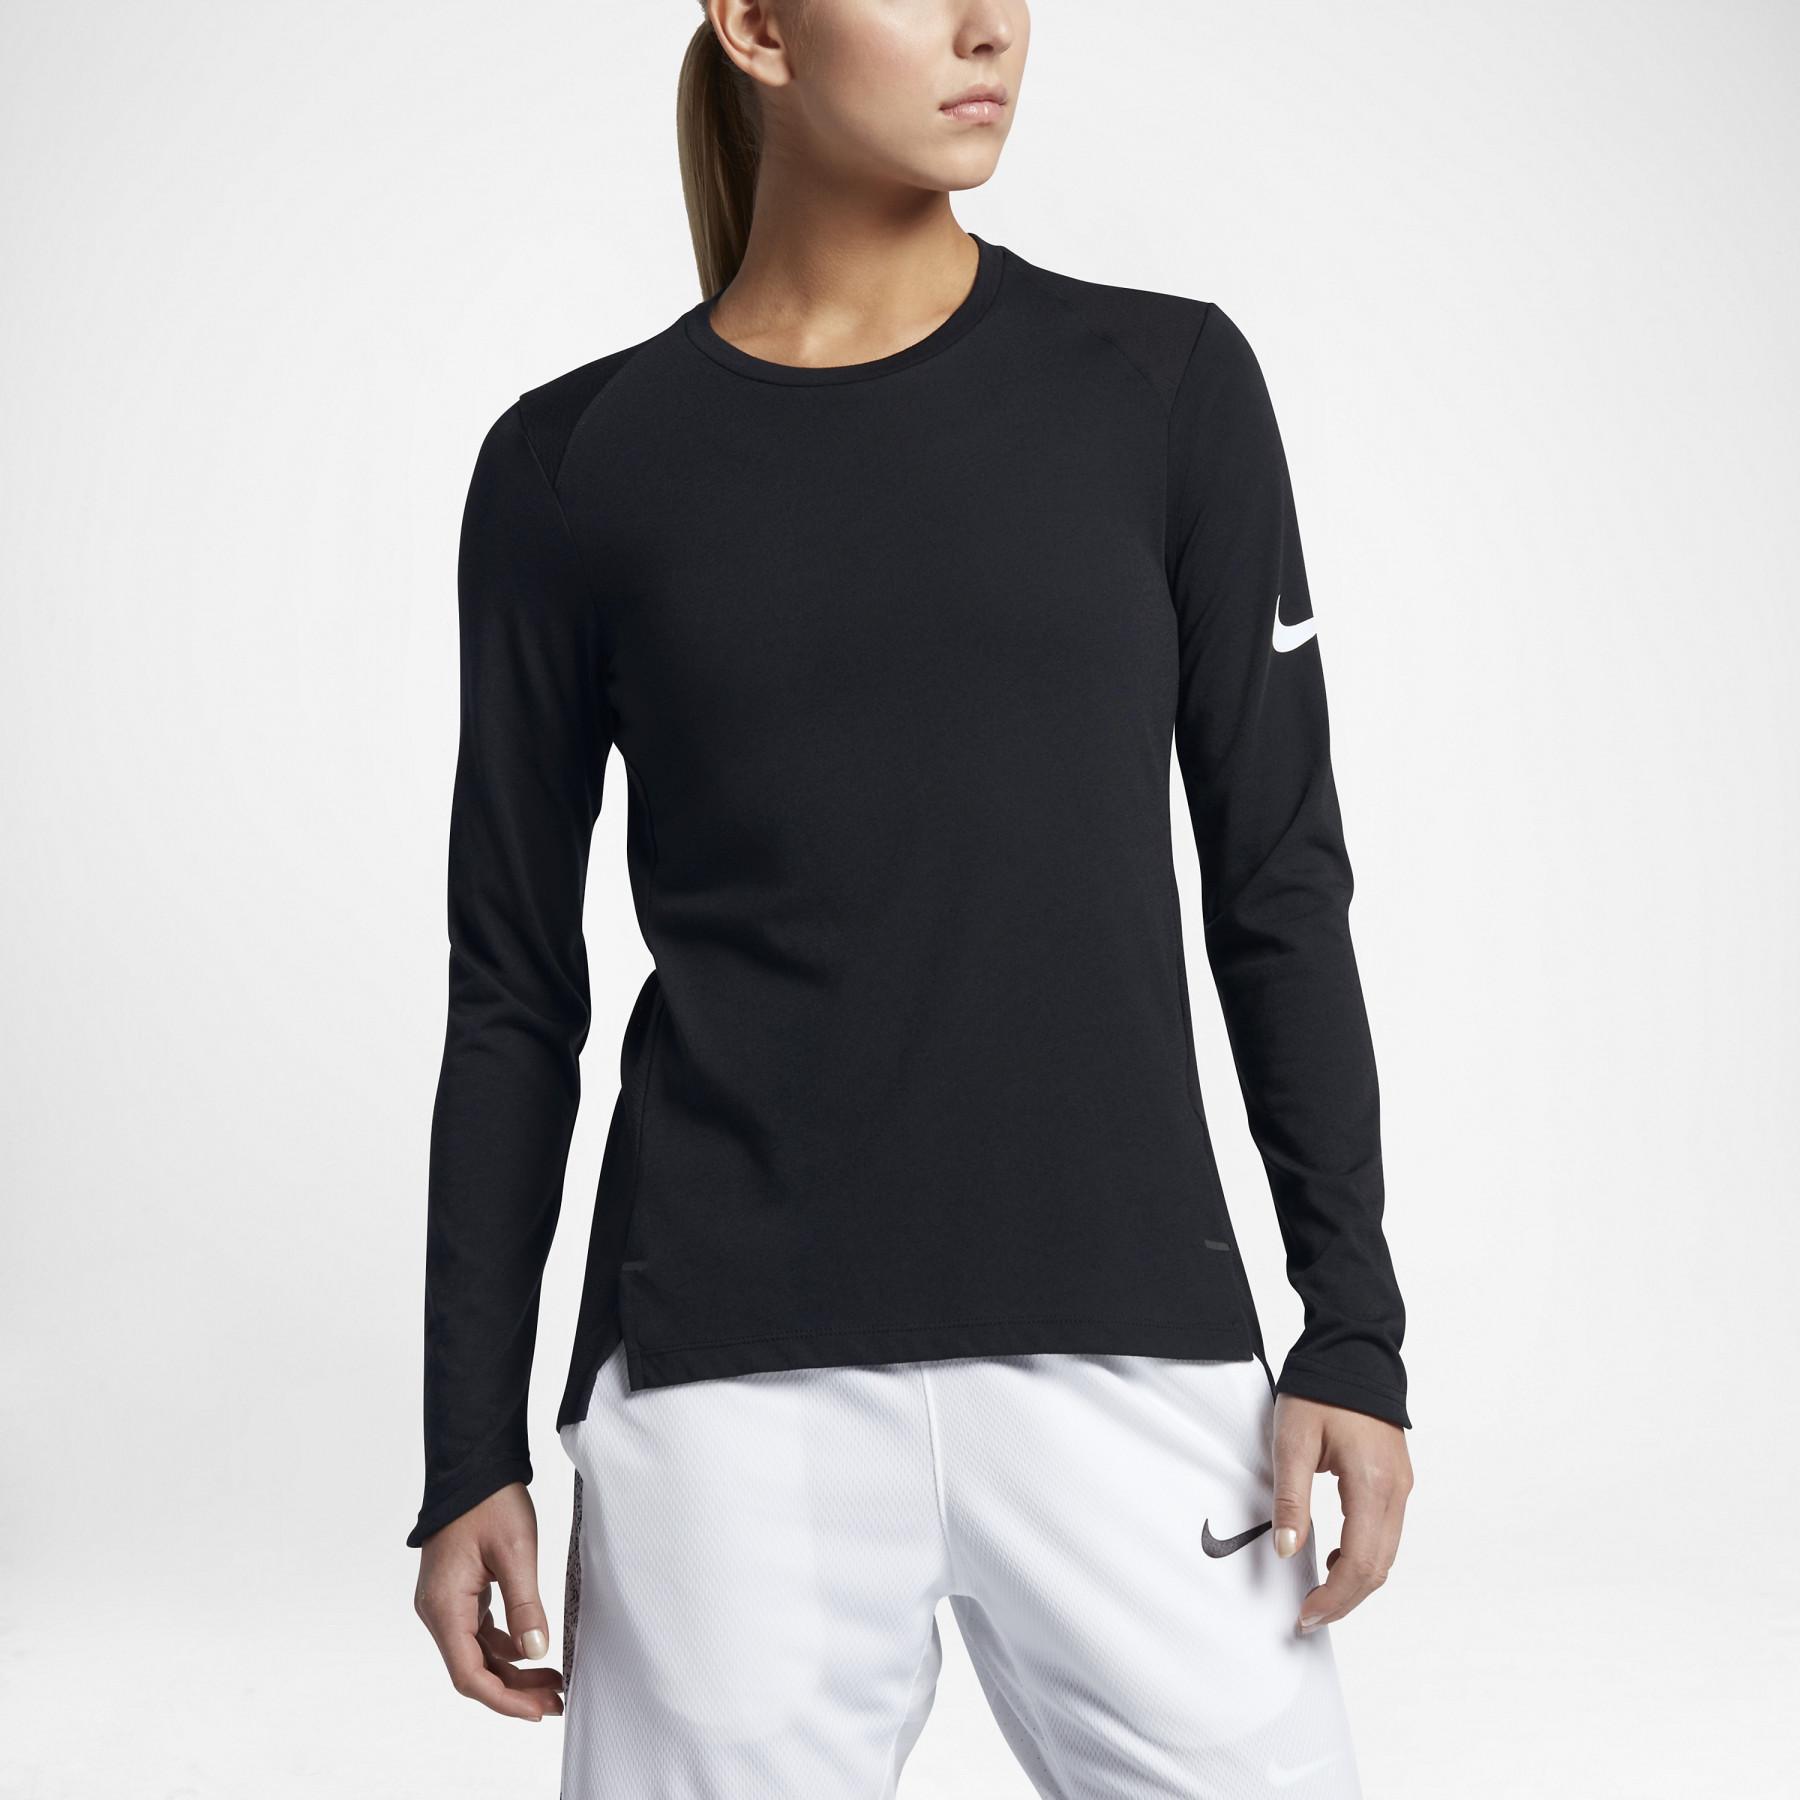 Camisola de manga comprida feminina Nike Dry Elite